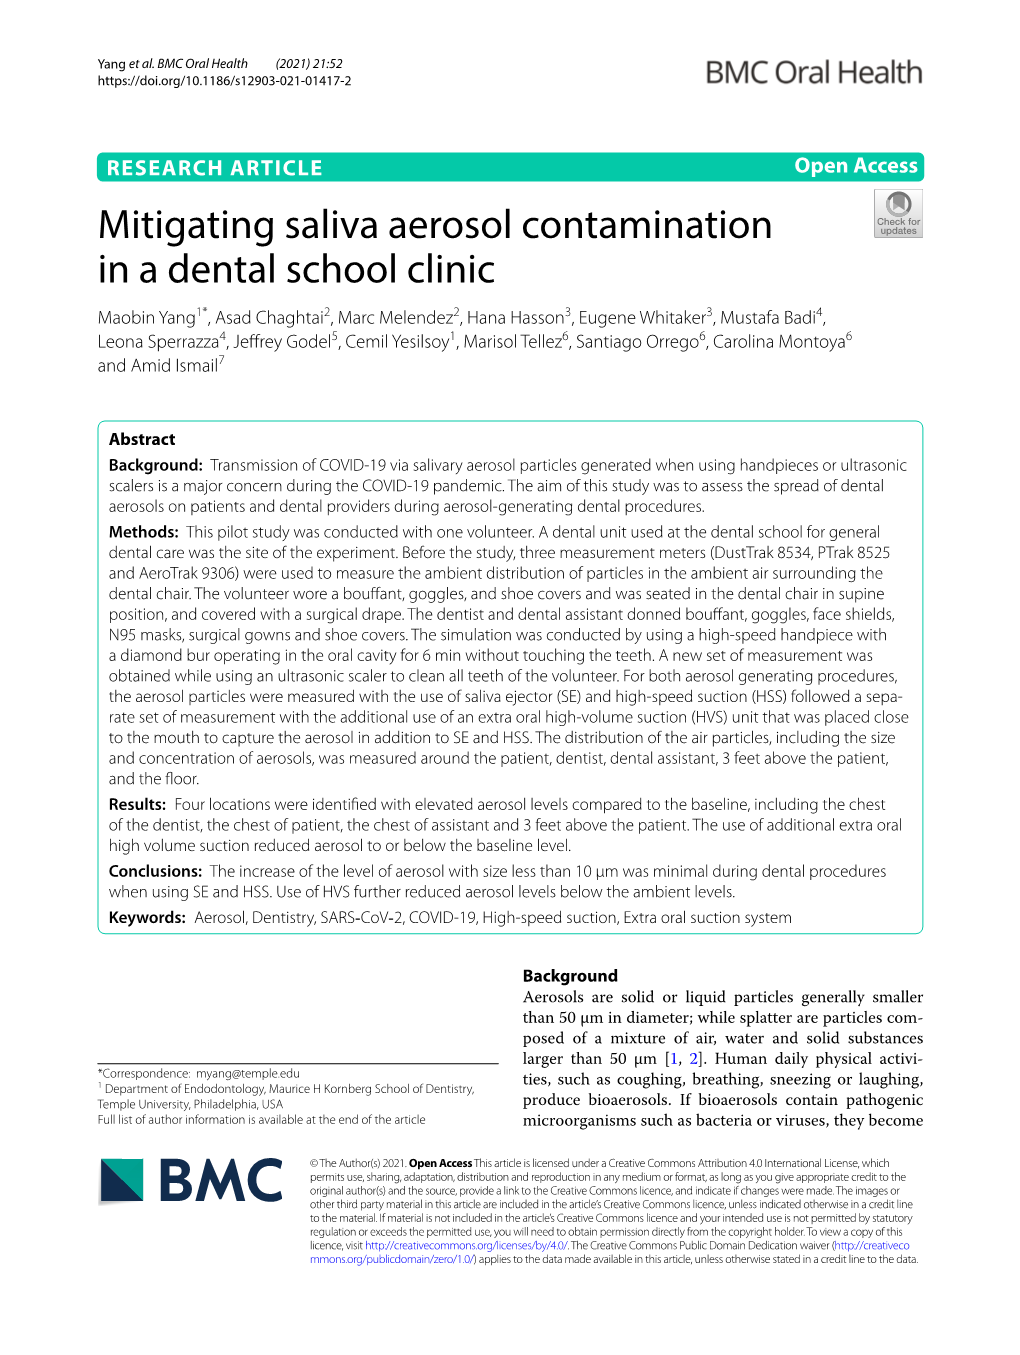 Mitigating Saliva Aerosol Contamination in a Dental School Clinic